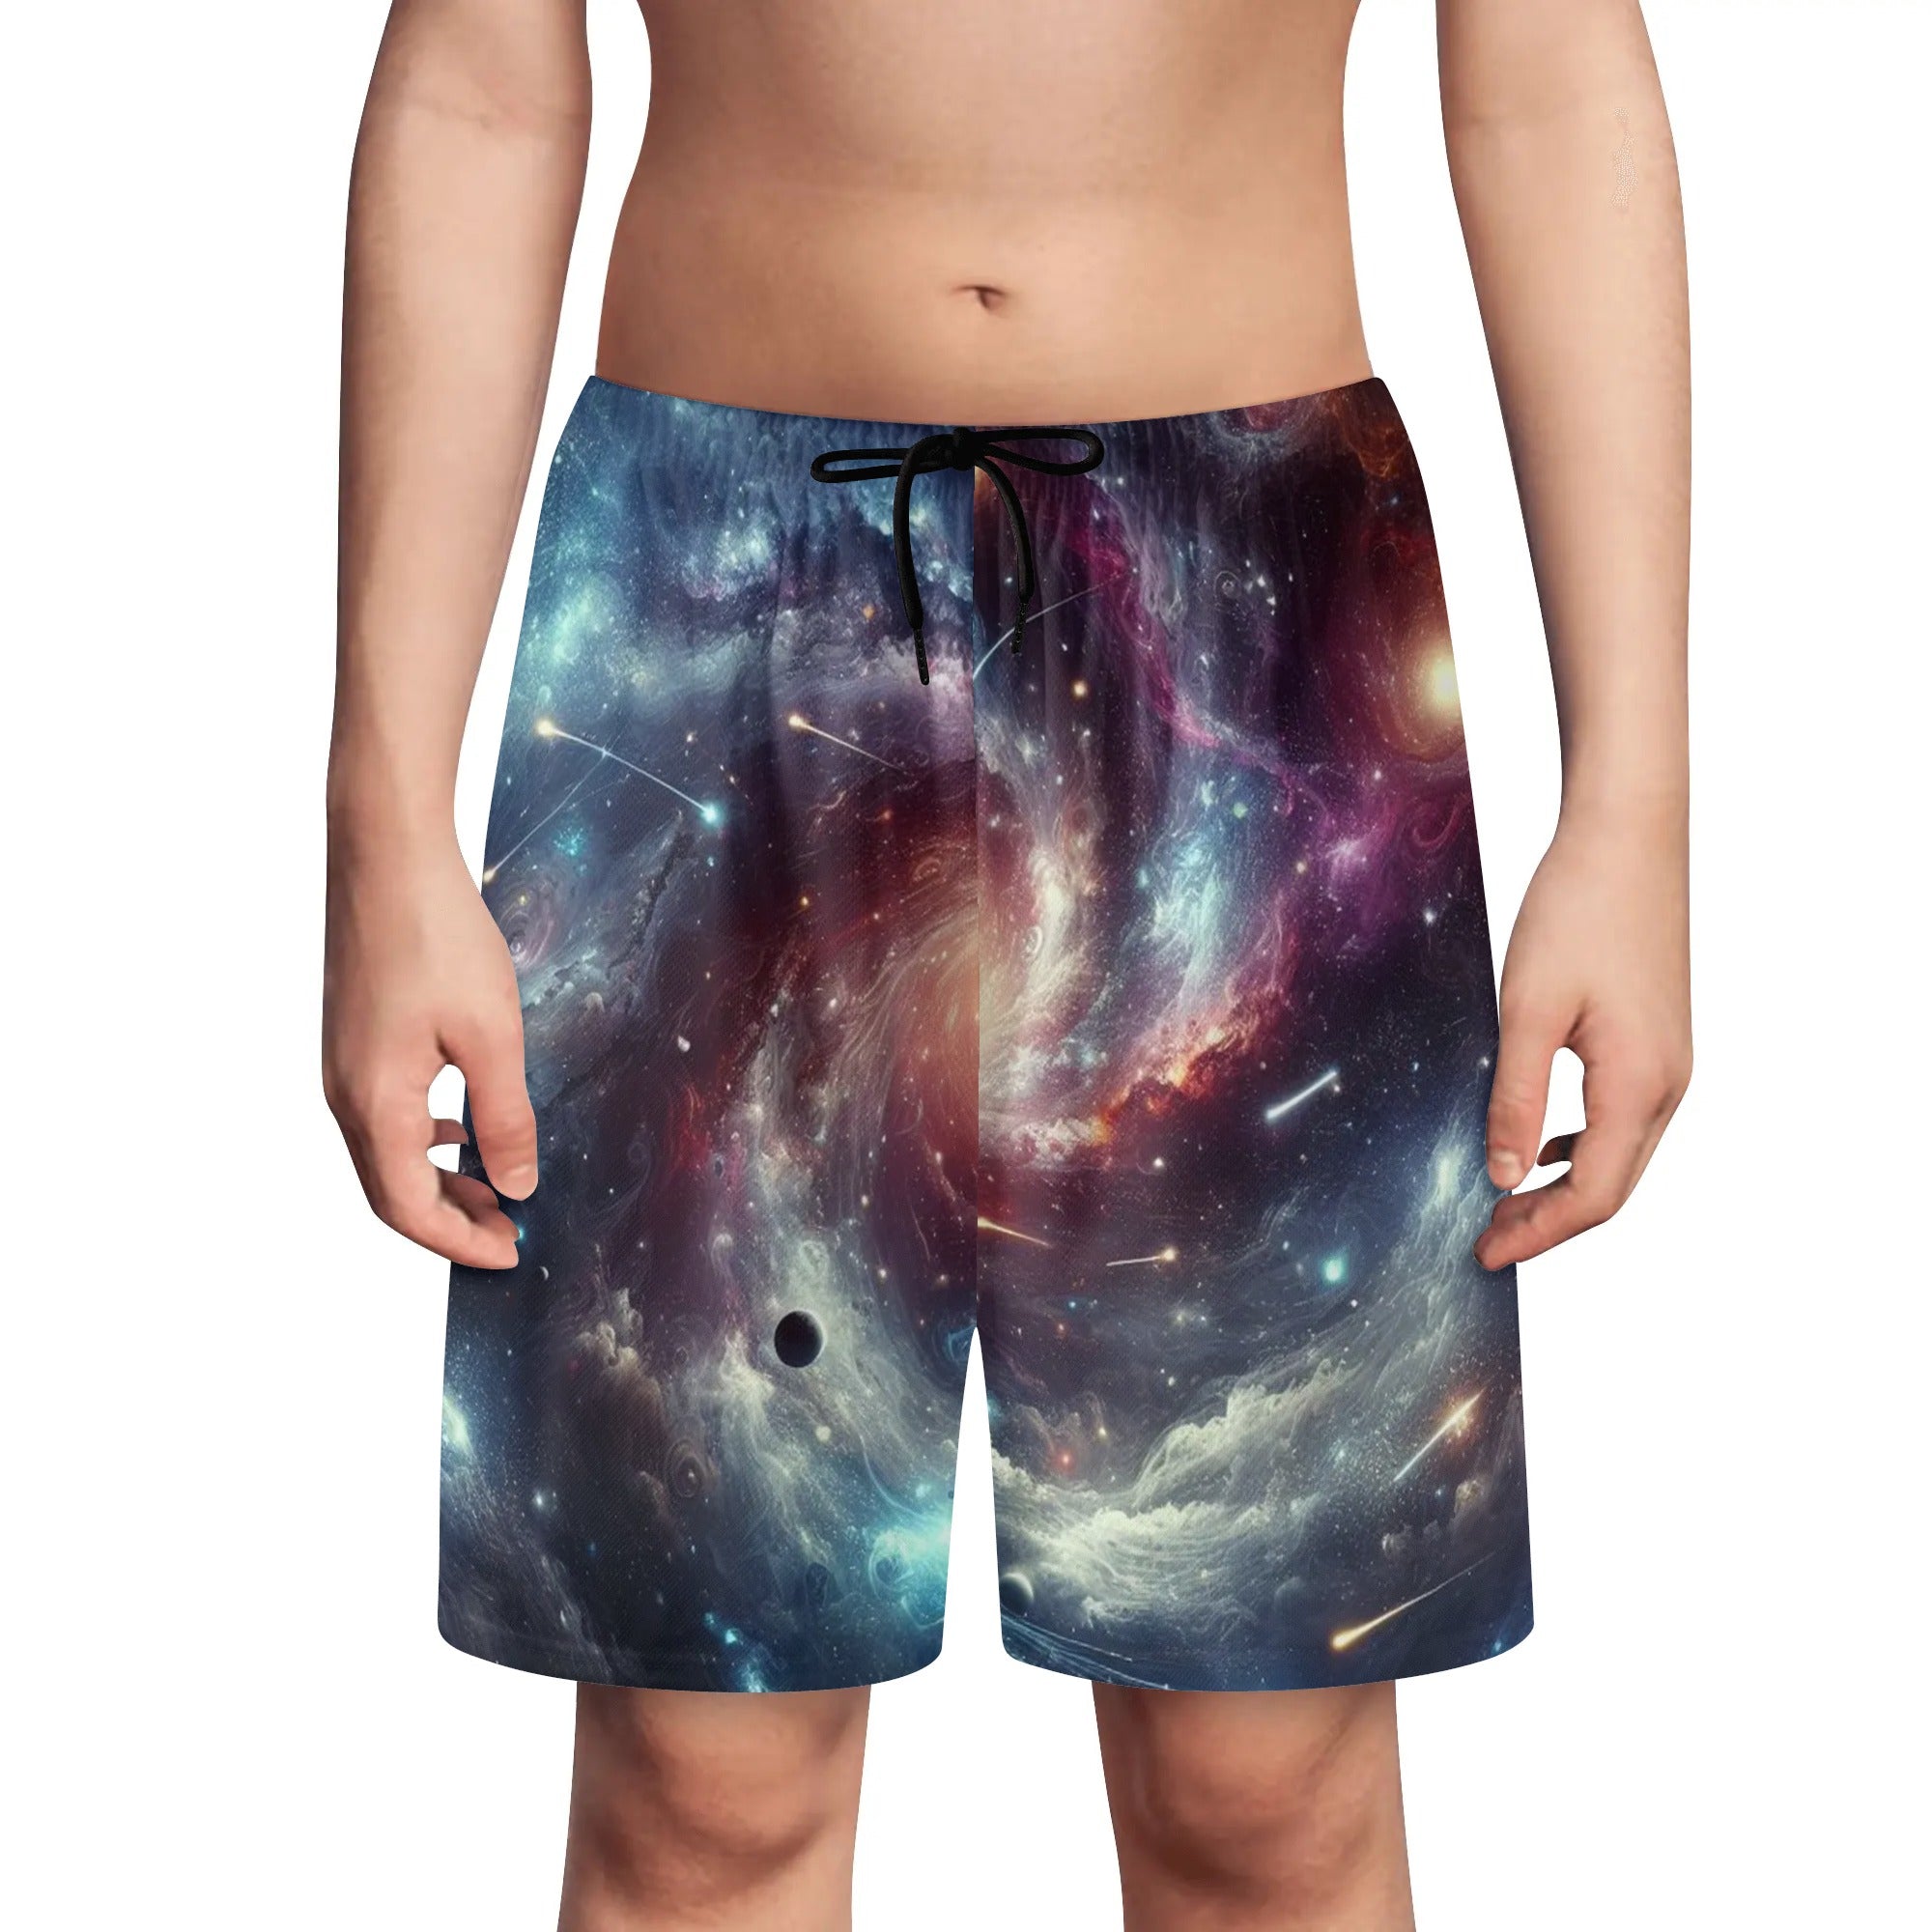 Black String - Galaxy Youth Lightweight Beach Shorts for Boys - boys beach shorts at TFC&H Co.